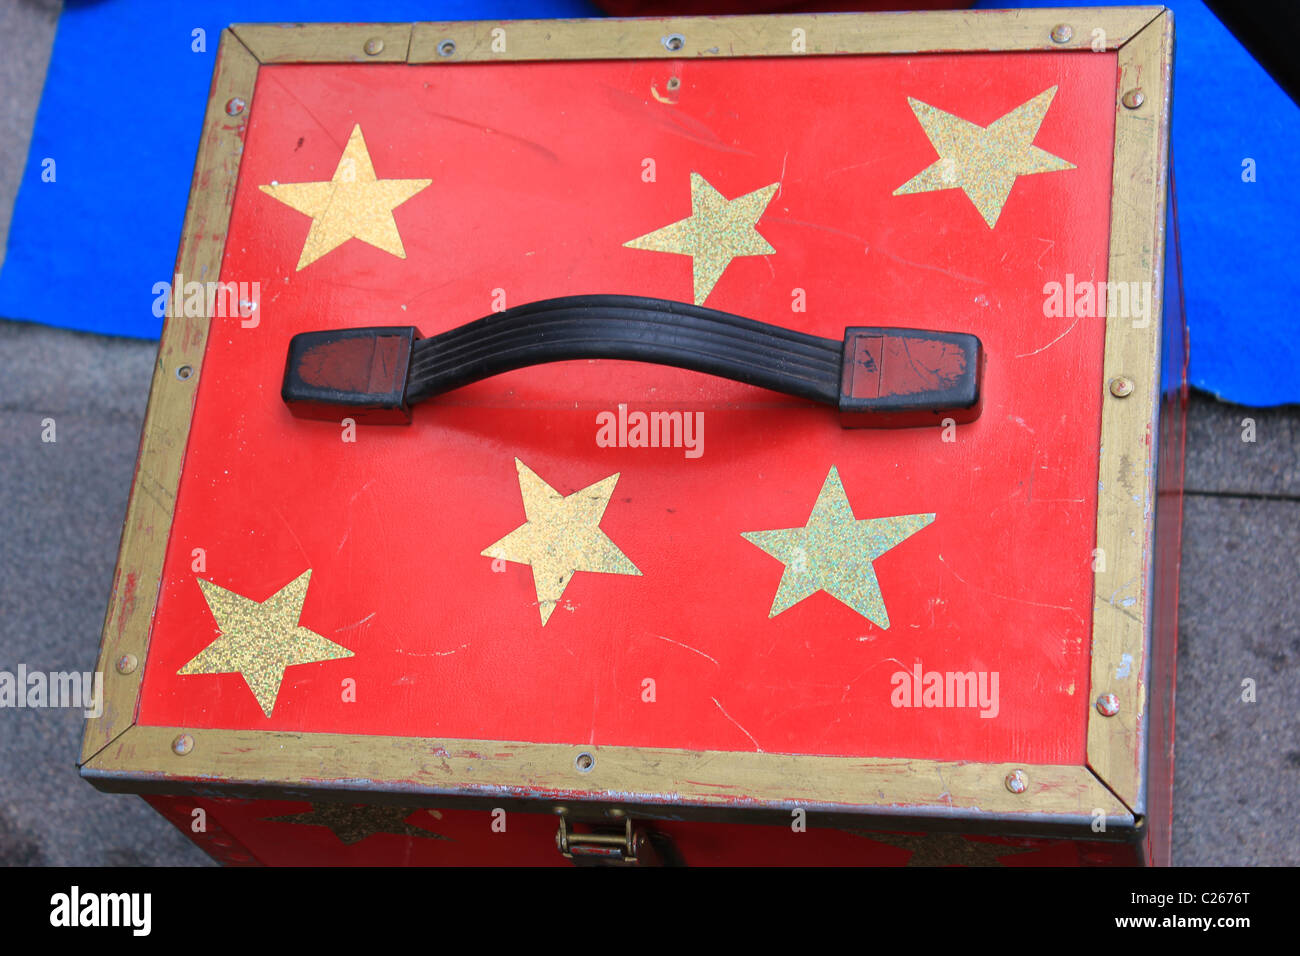 Caja roja con estrellas doradas Foto de stock